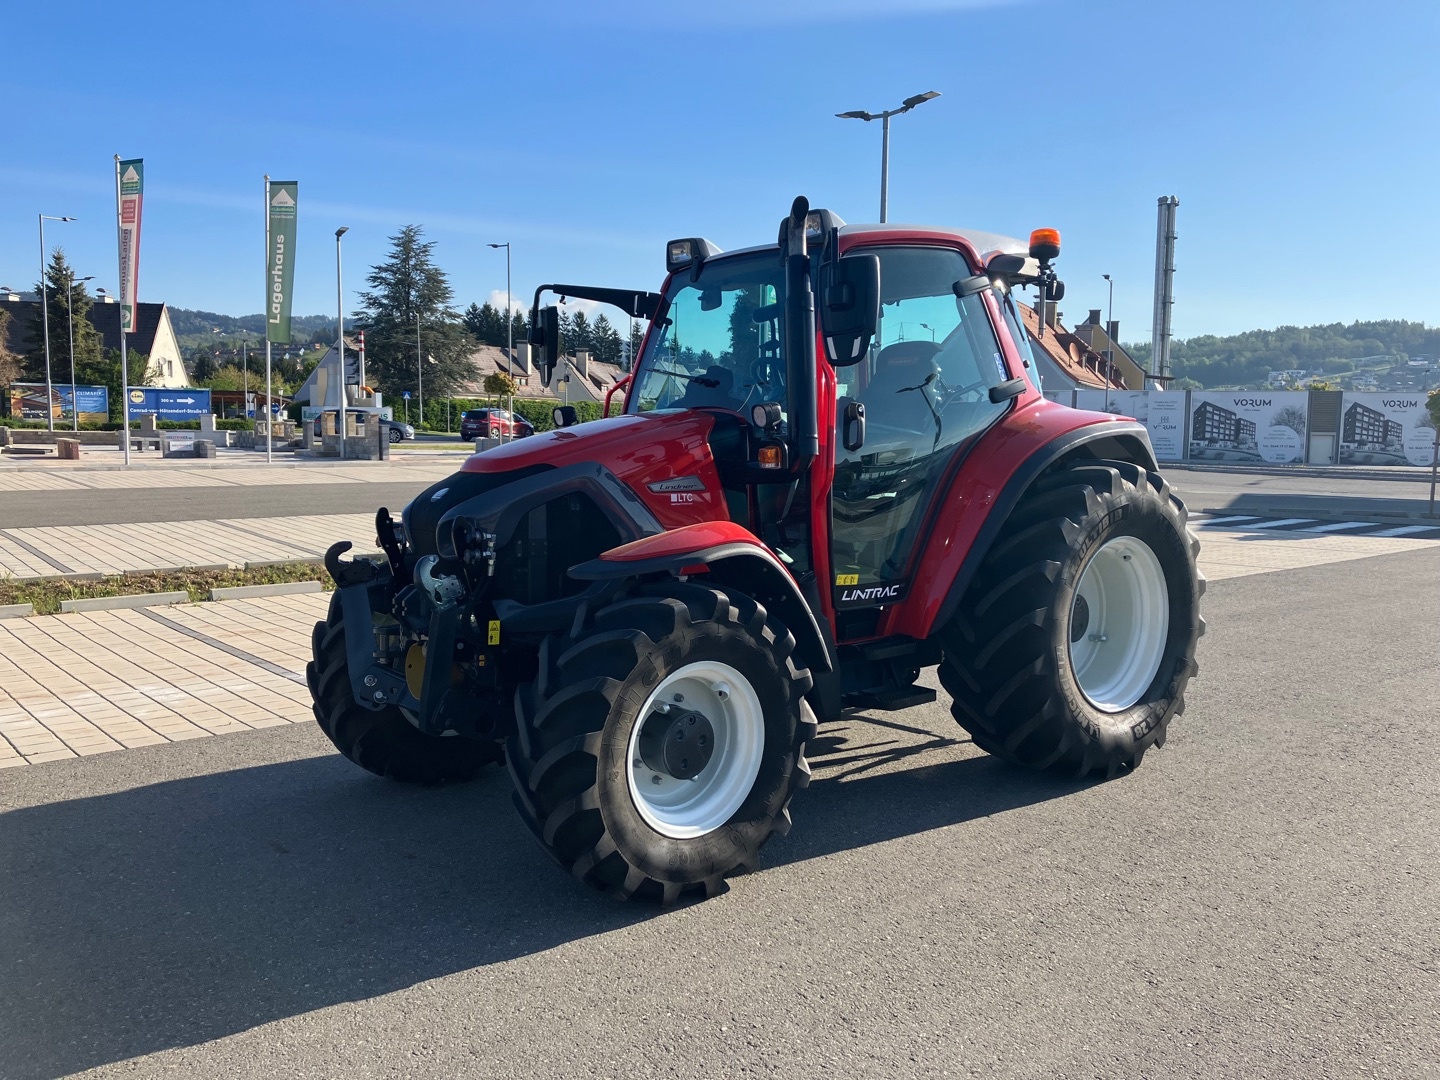 Lindner Lintrac 90 tractor €85,398